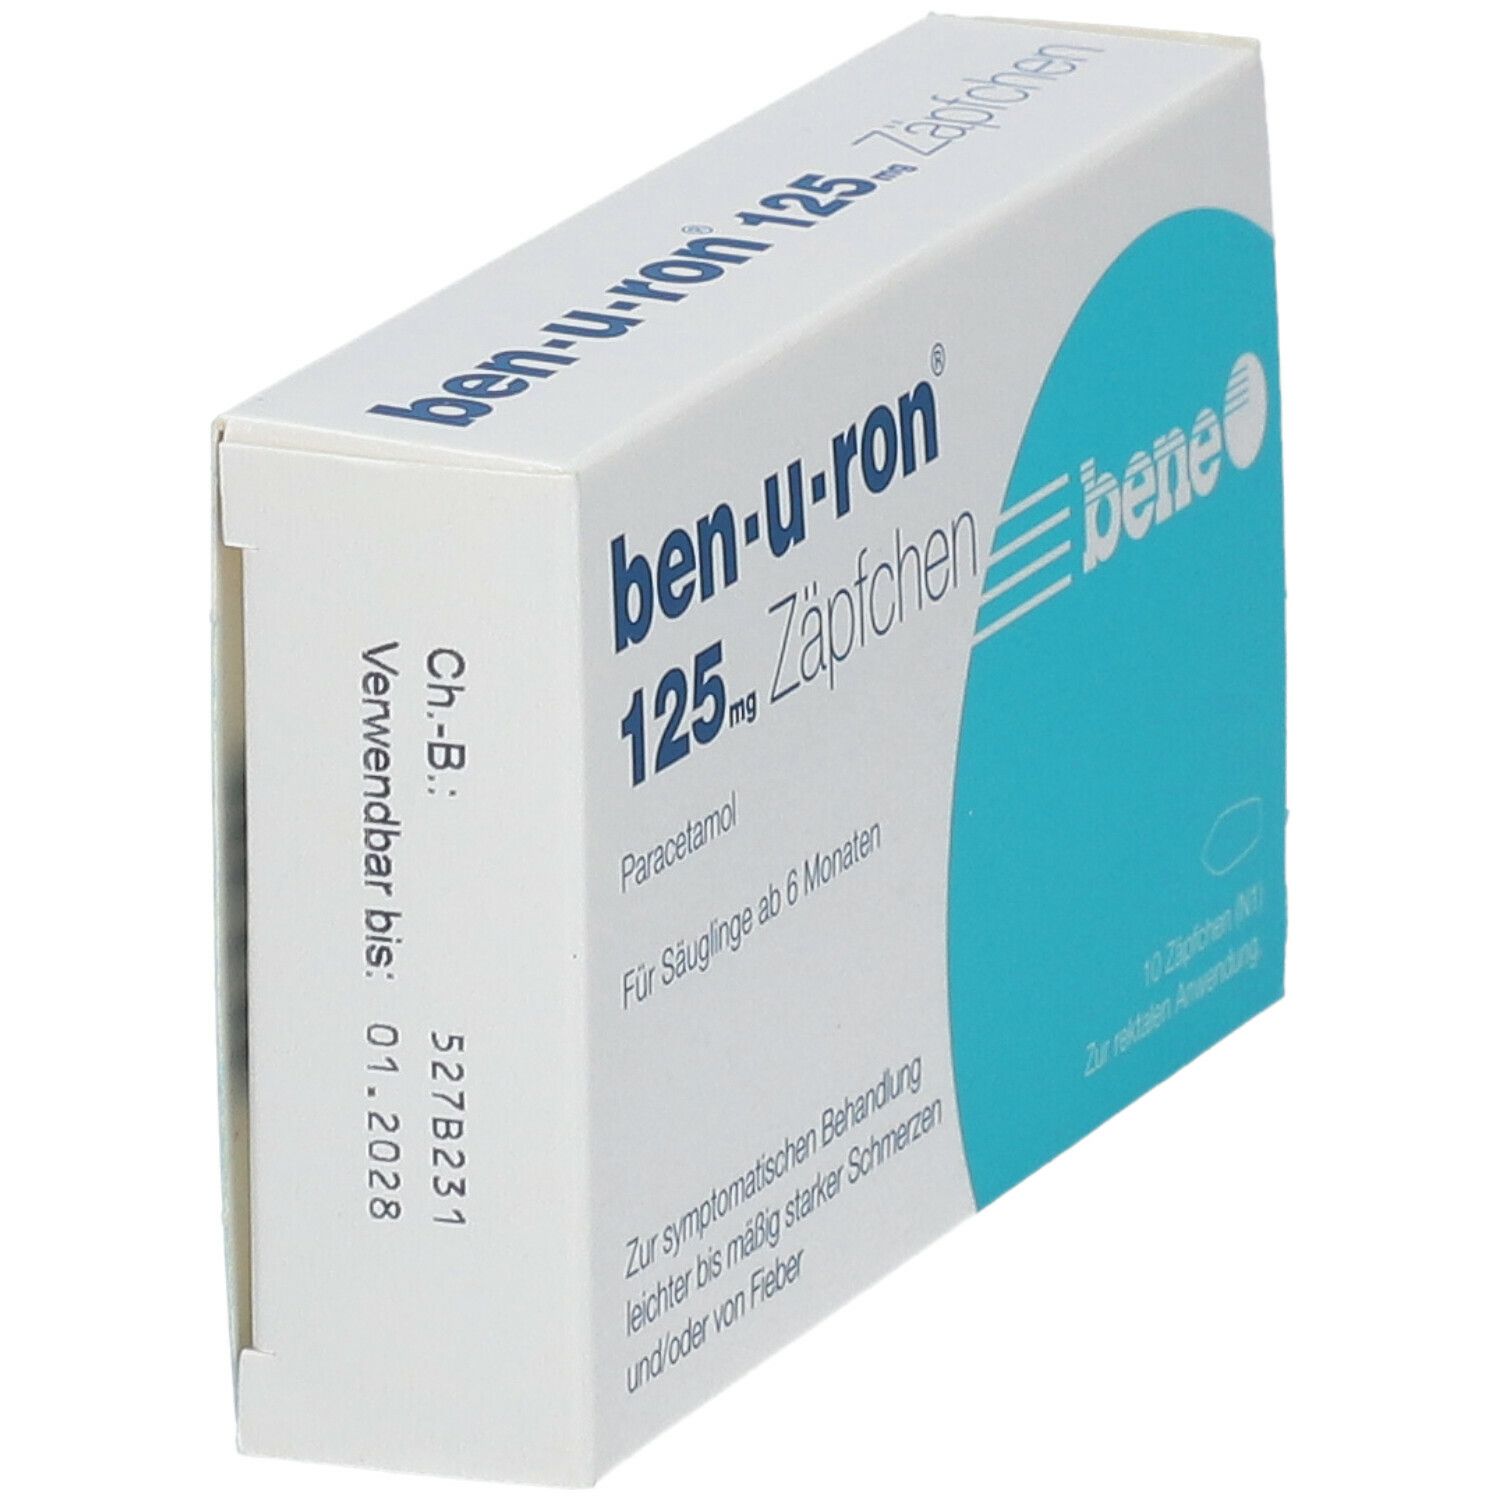 ben-u-ron® 125 mg